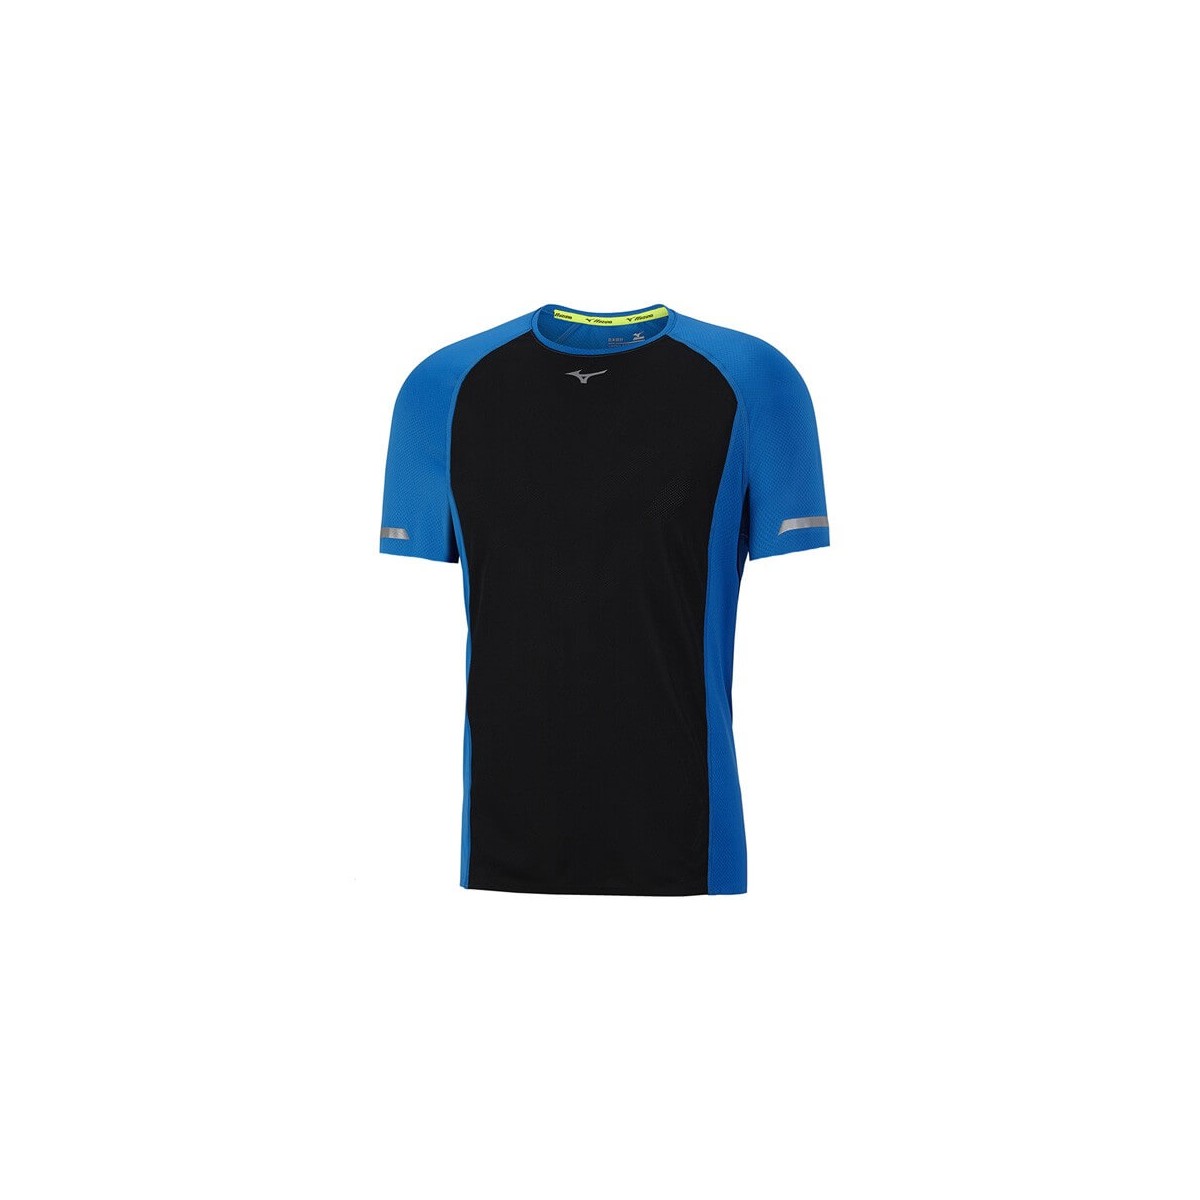 Aero Tee - Azul, Camisetas running hombre